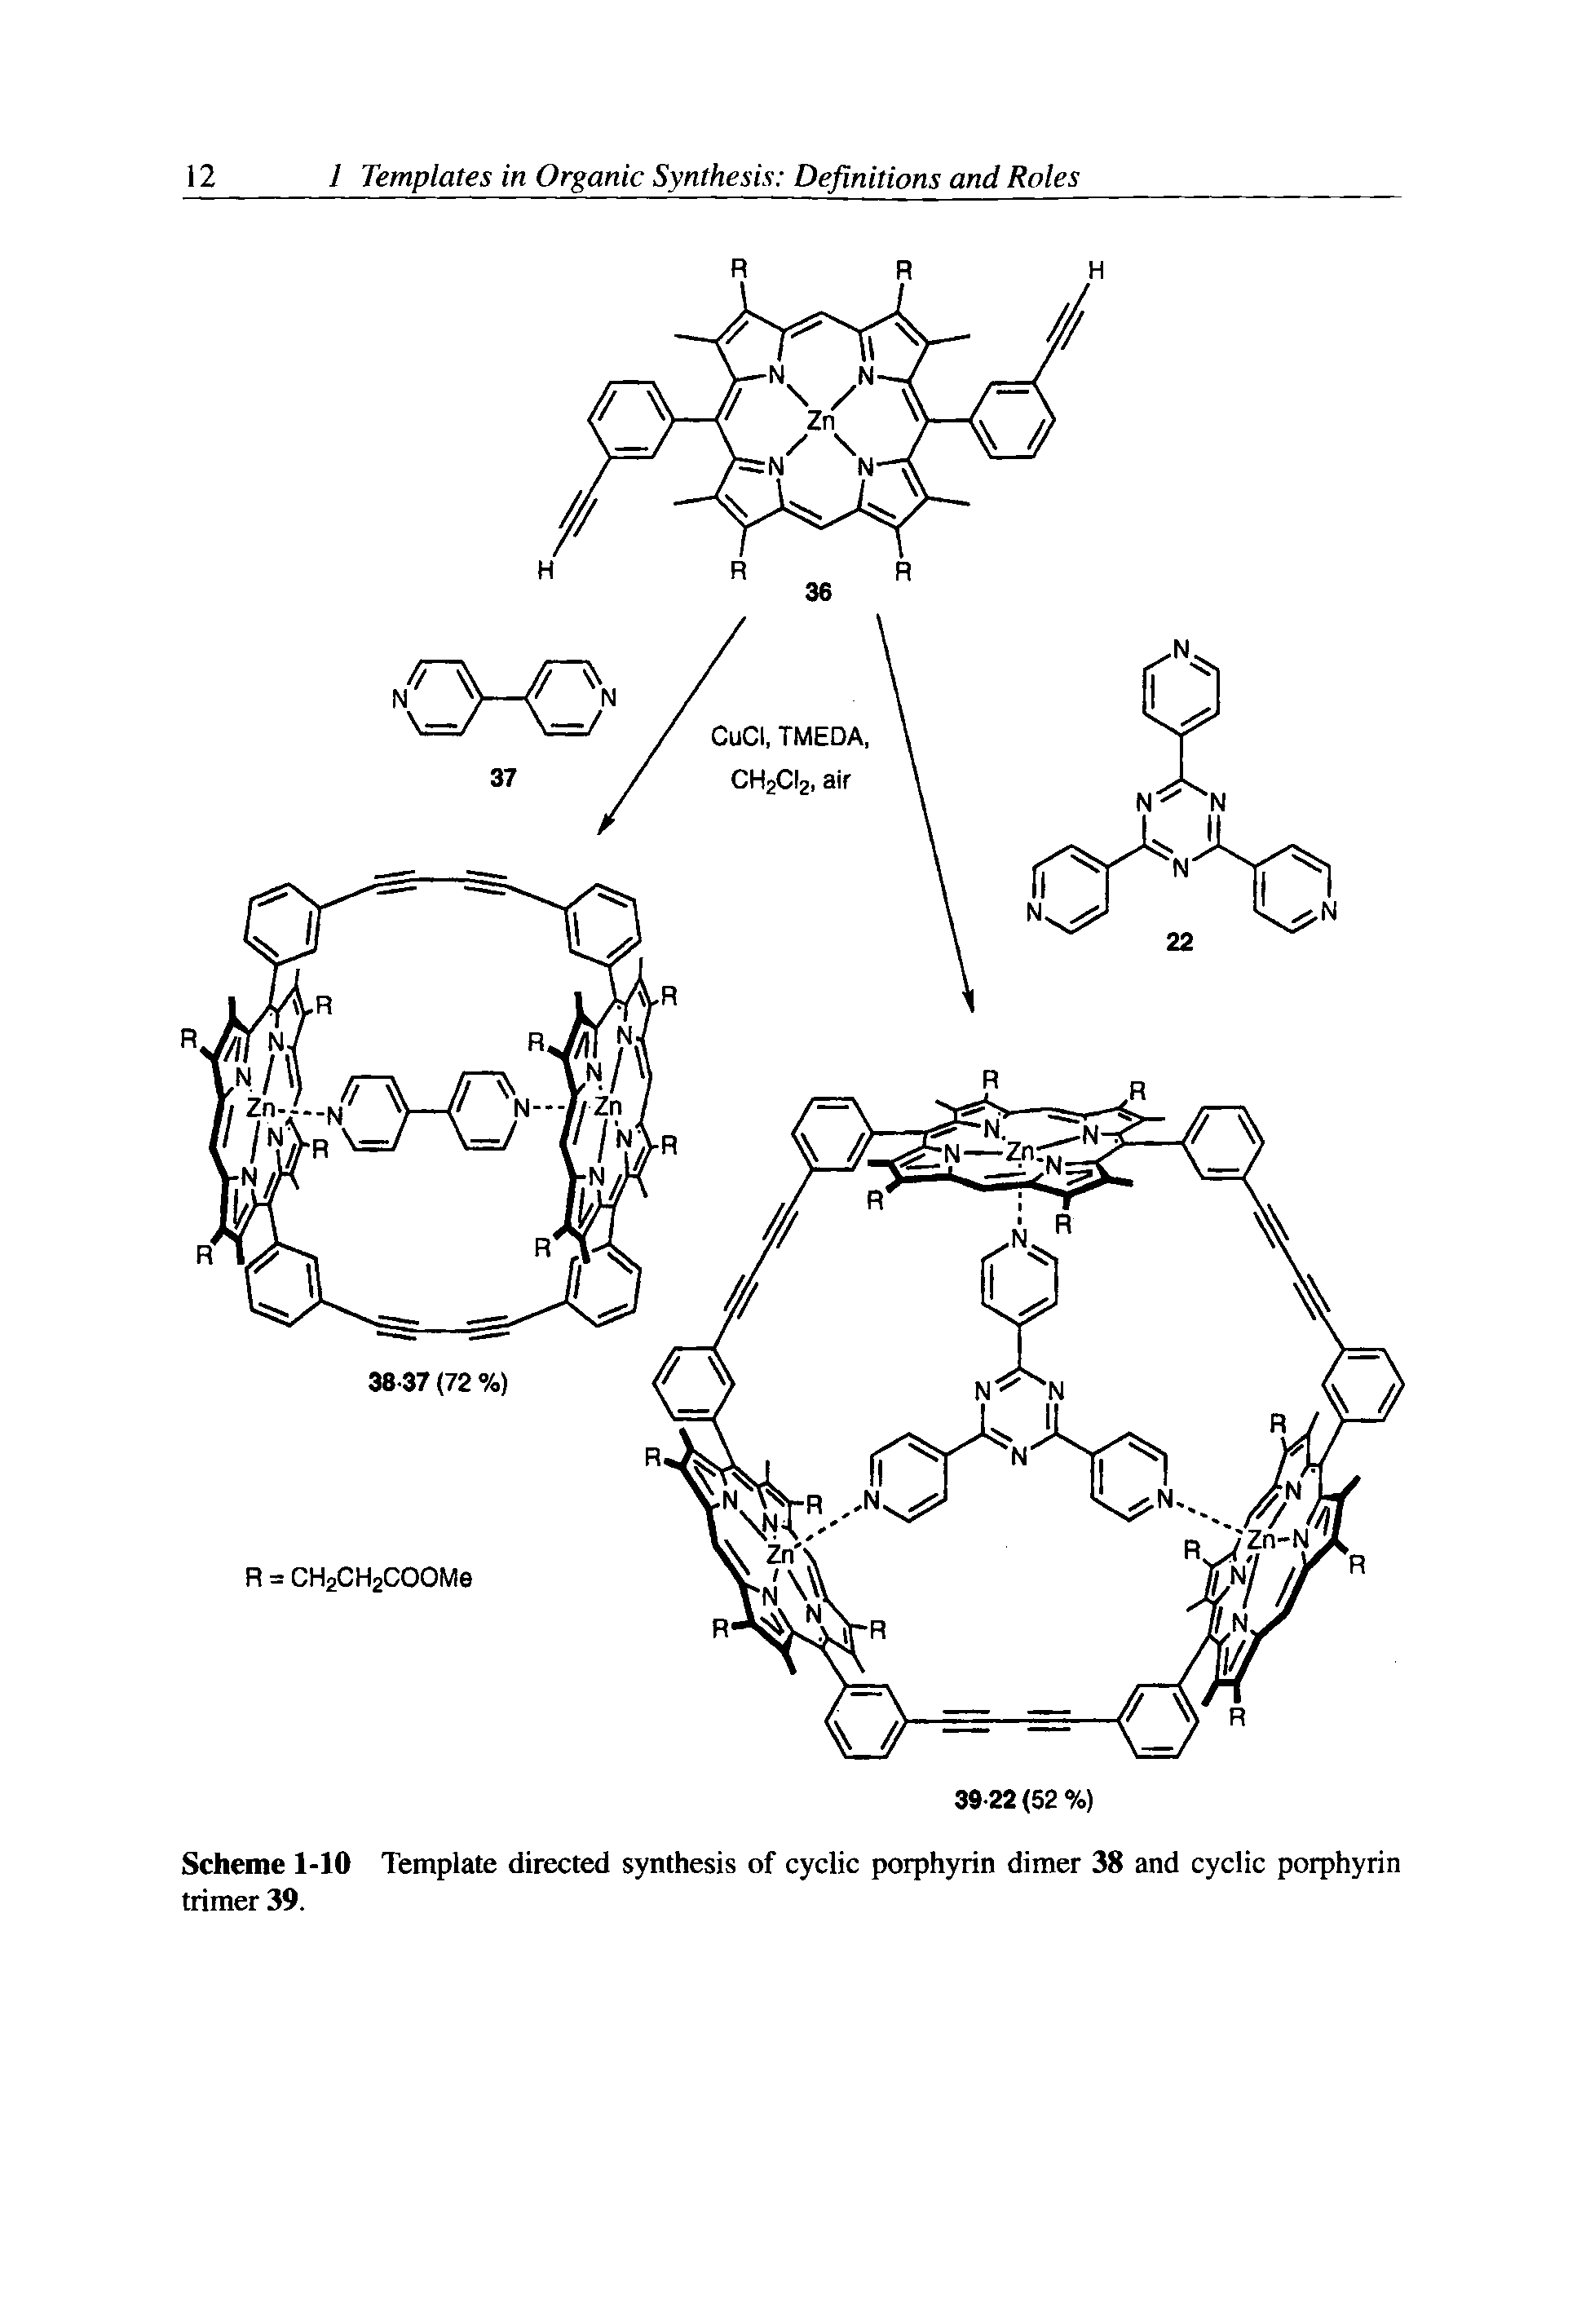 Scheme 1-10 Template directed synthesis of cyclic porphyrin dimer 38 and cyclic porphyrin trimer 39.